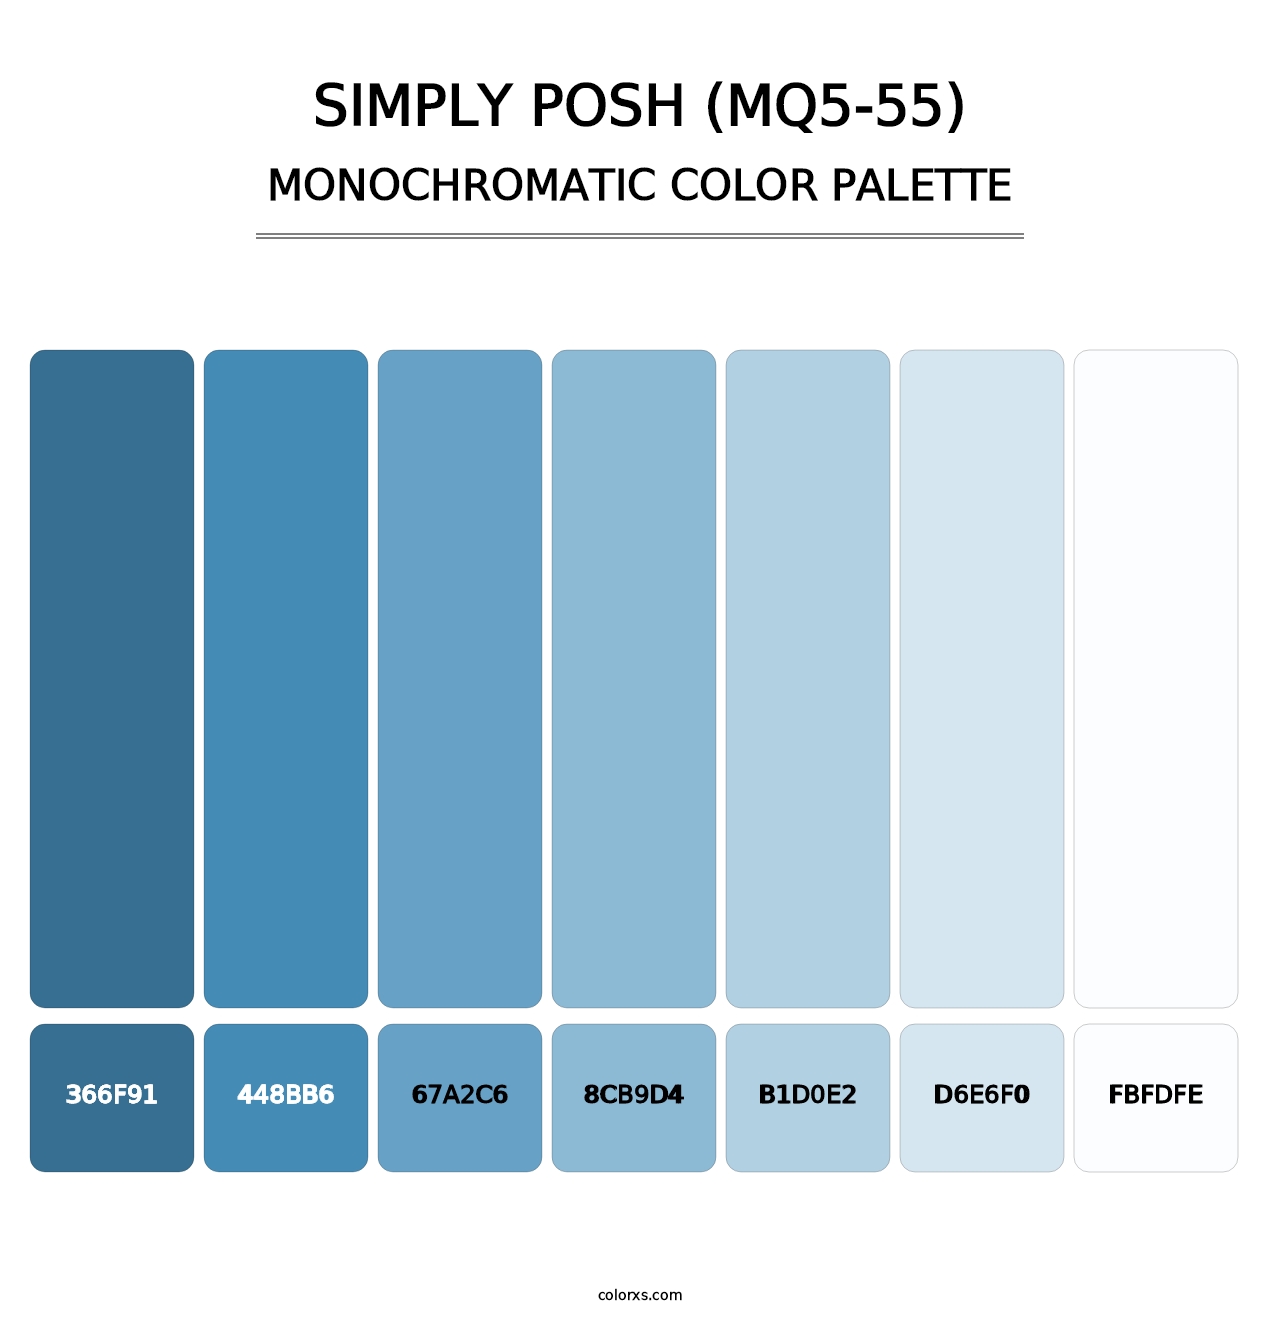 Simply Posh (MQ5-55) - Monochromatic Color Palette